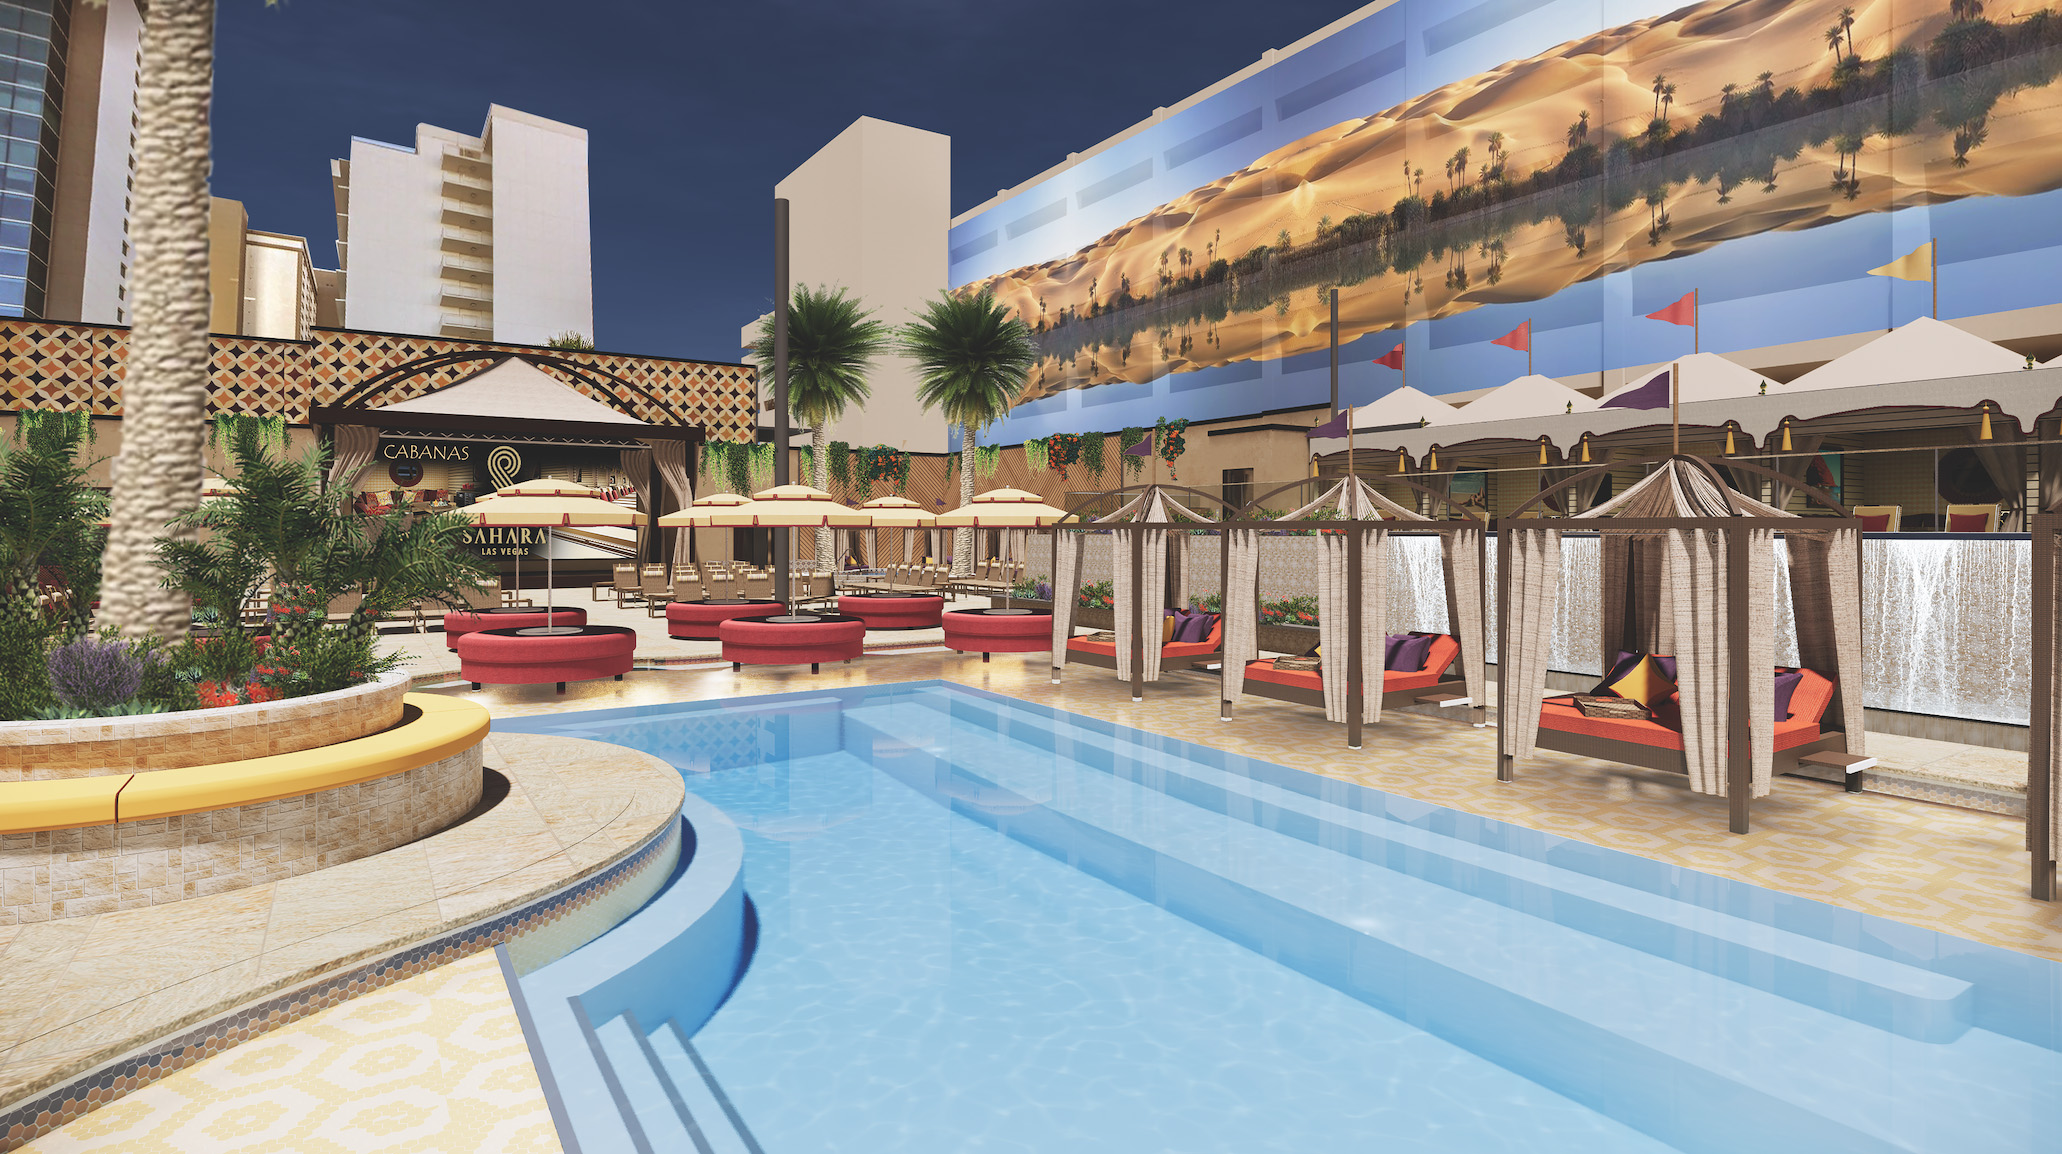 SAHARA Las Vegas - The Official Las Vegas PRIDE Pool Party, pool party las  vegas 